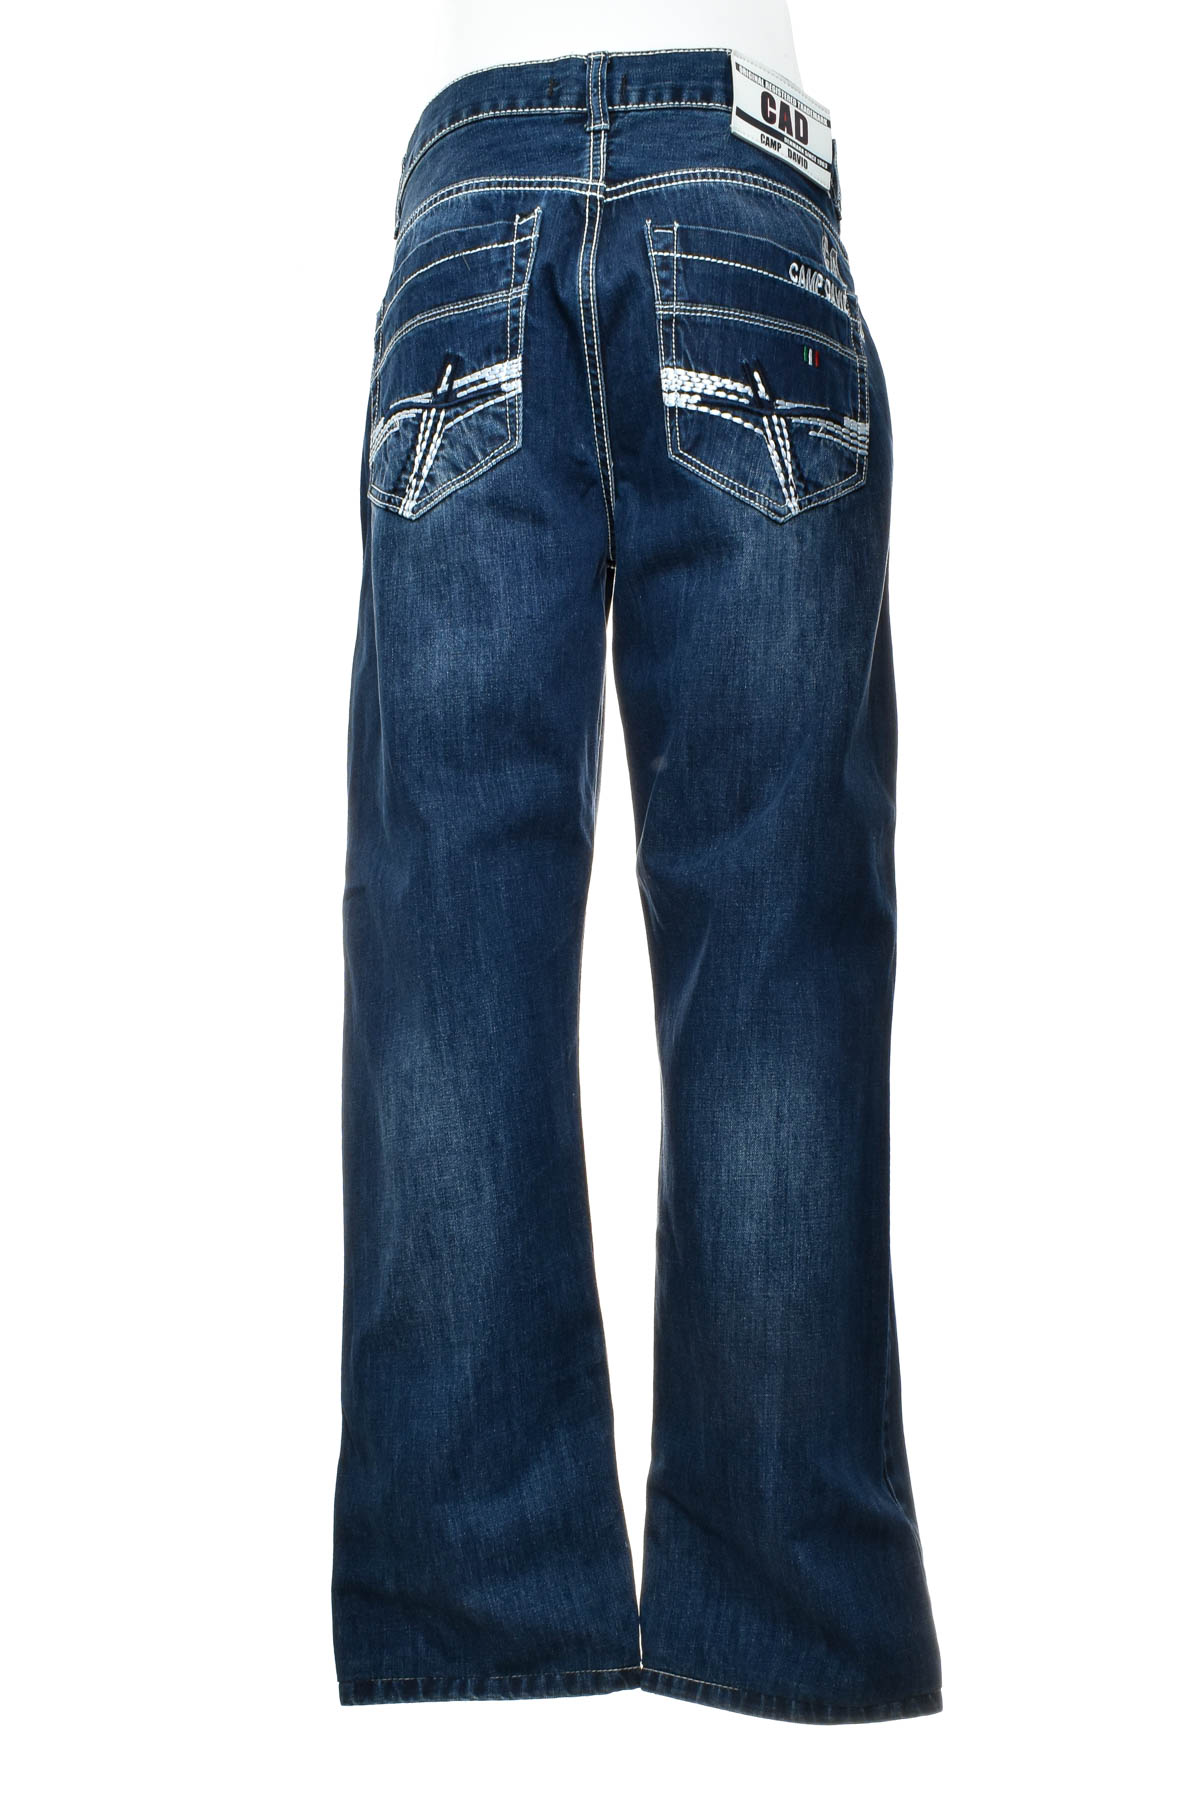 Men's jeans - CAMP DAVID - 1